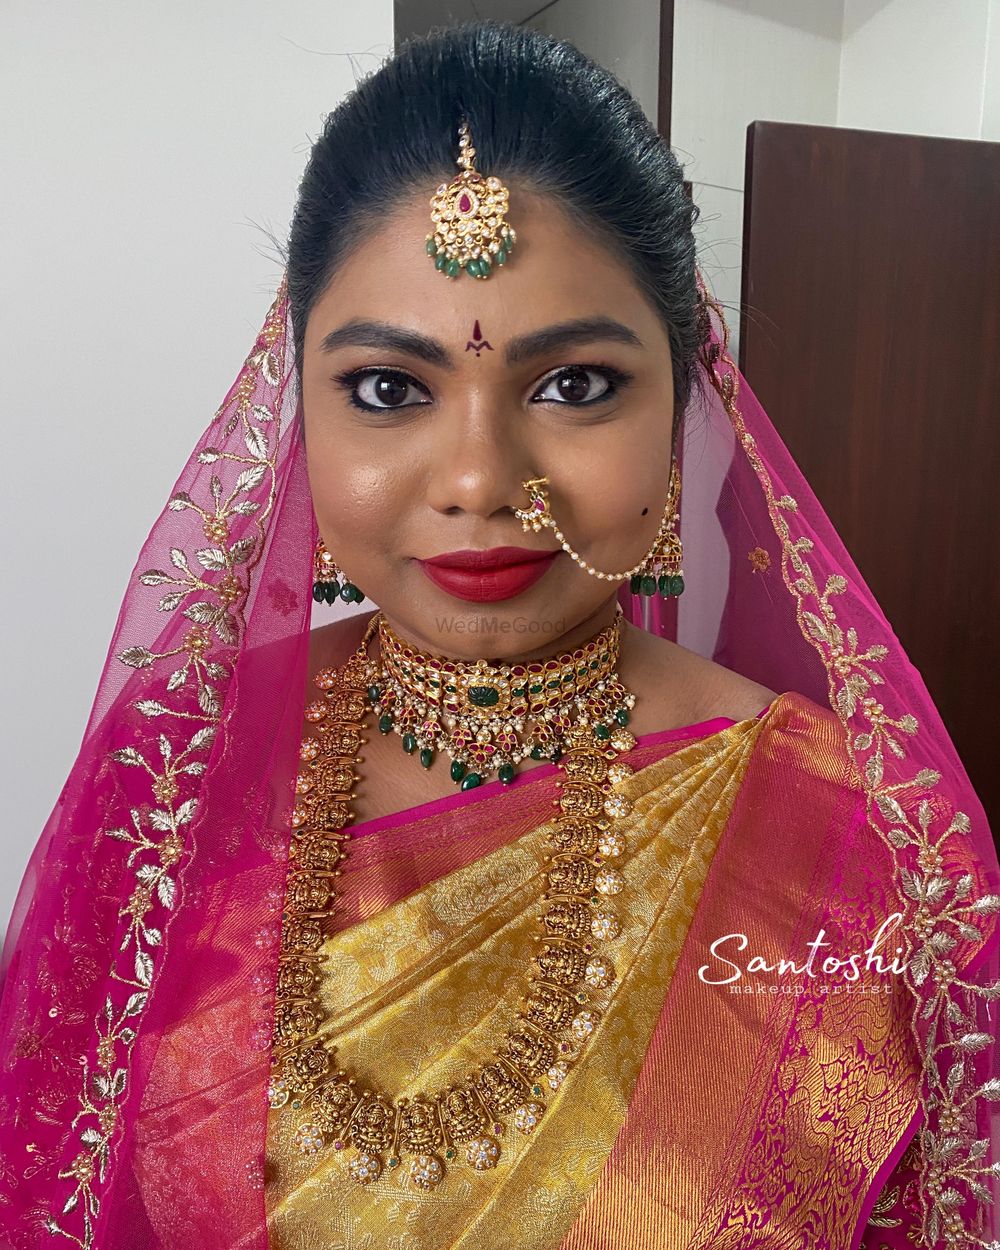 Photo From Vinisha Wedding Look - By Makeup Artist Santoshi